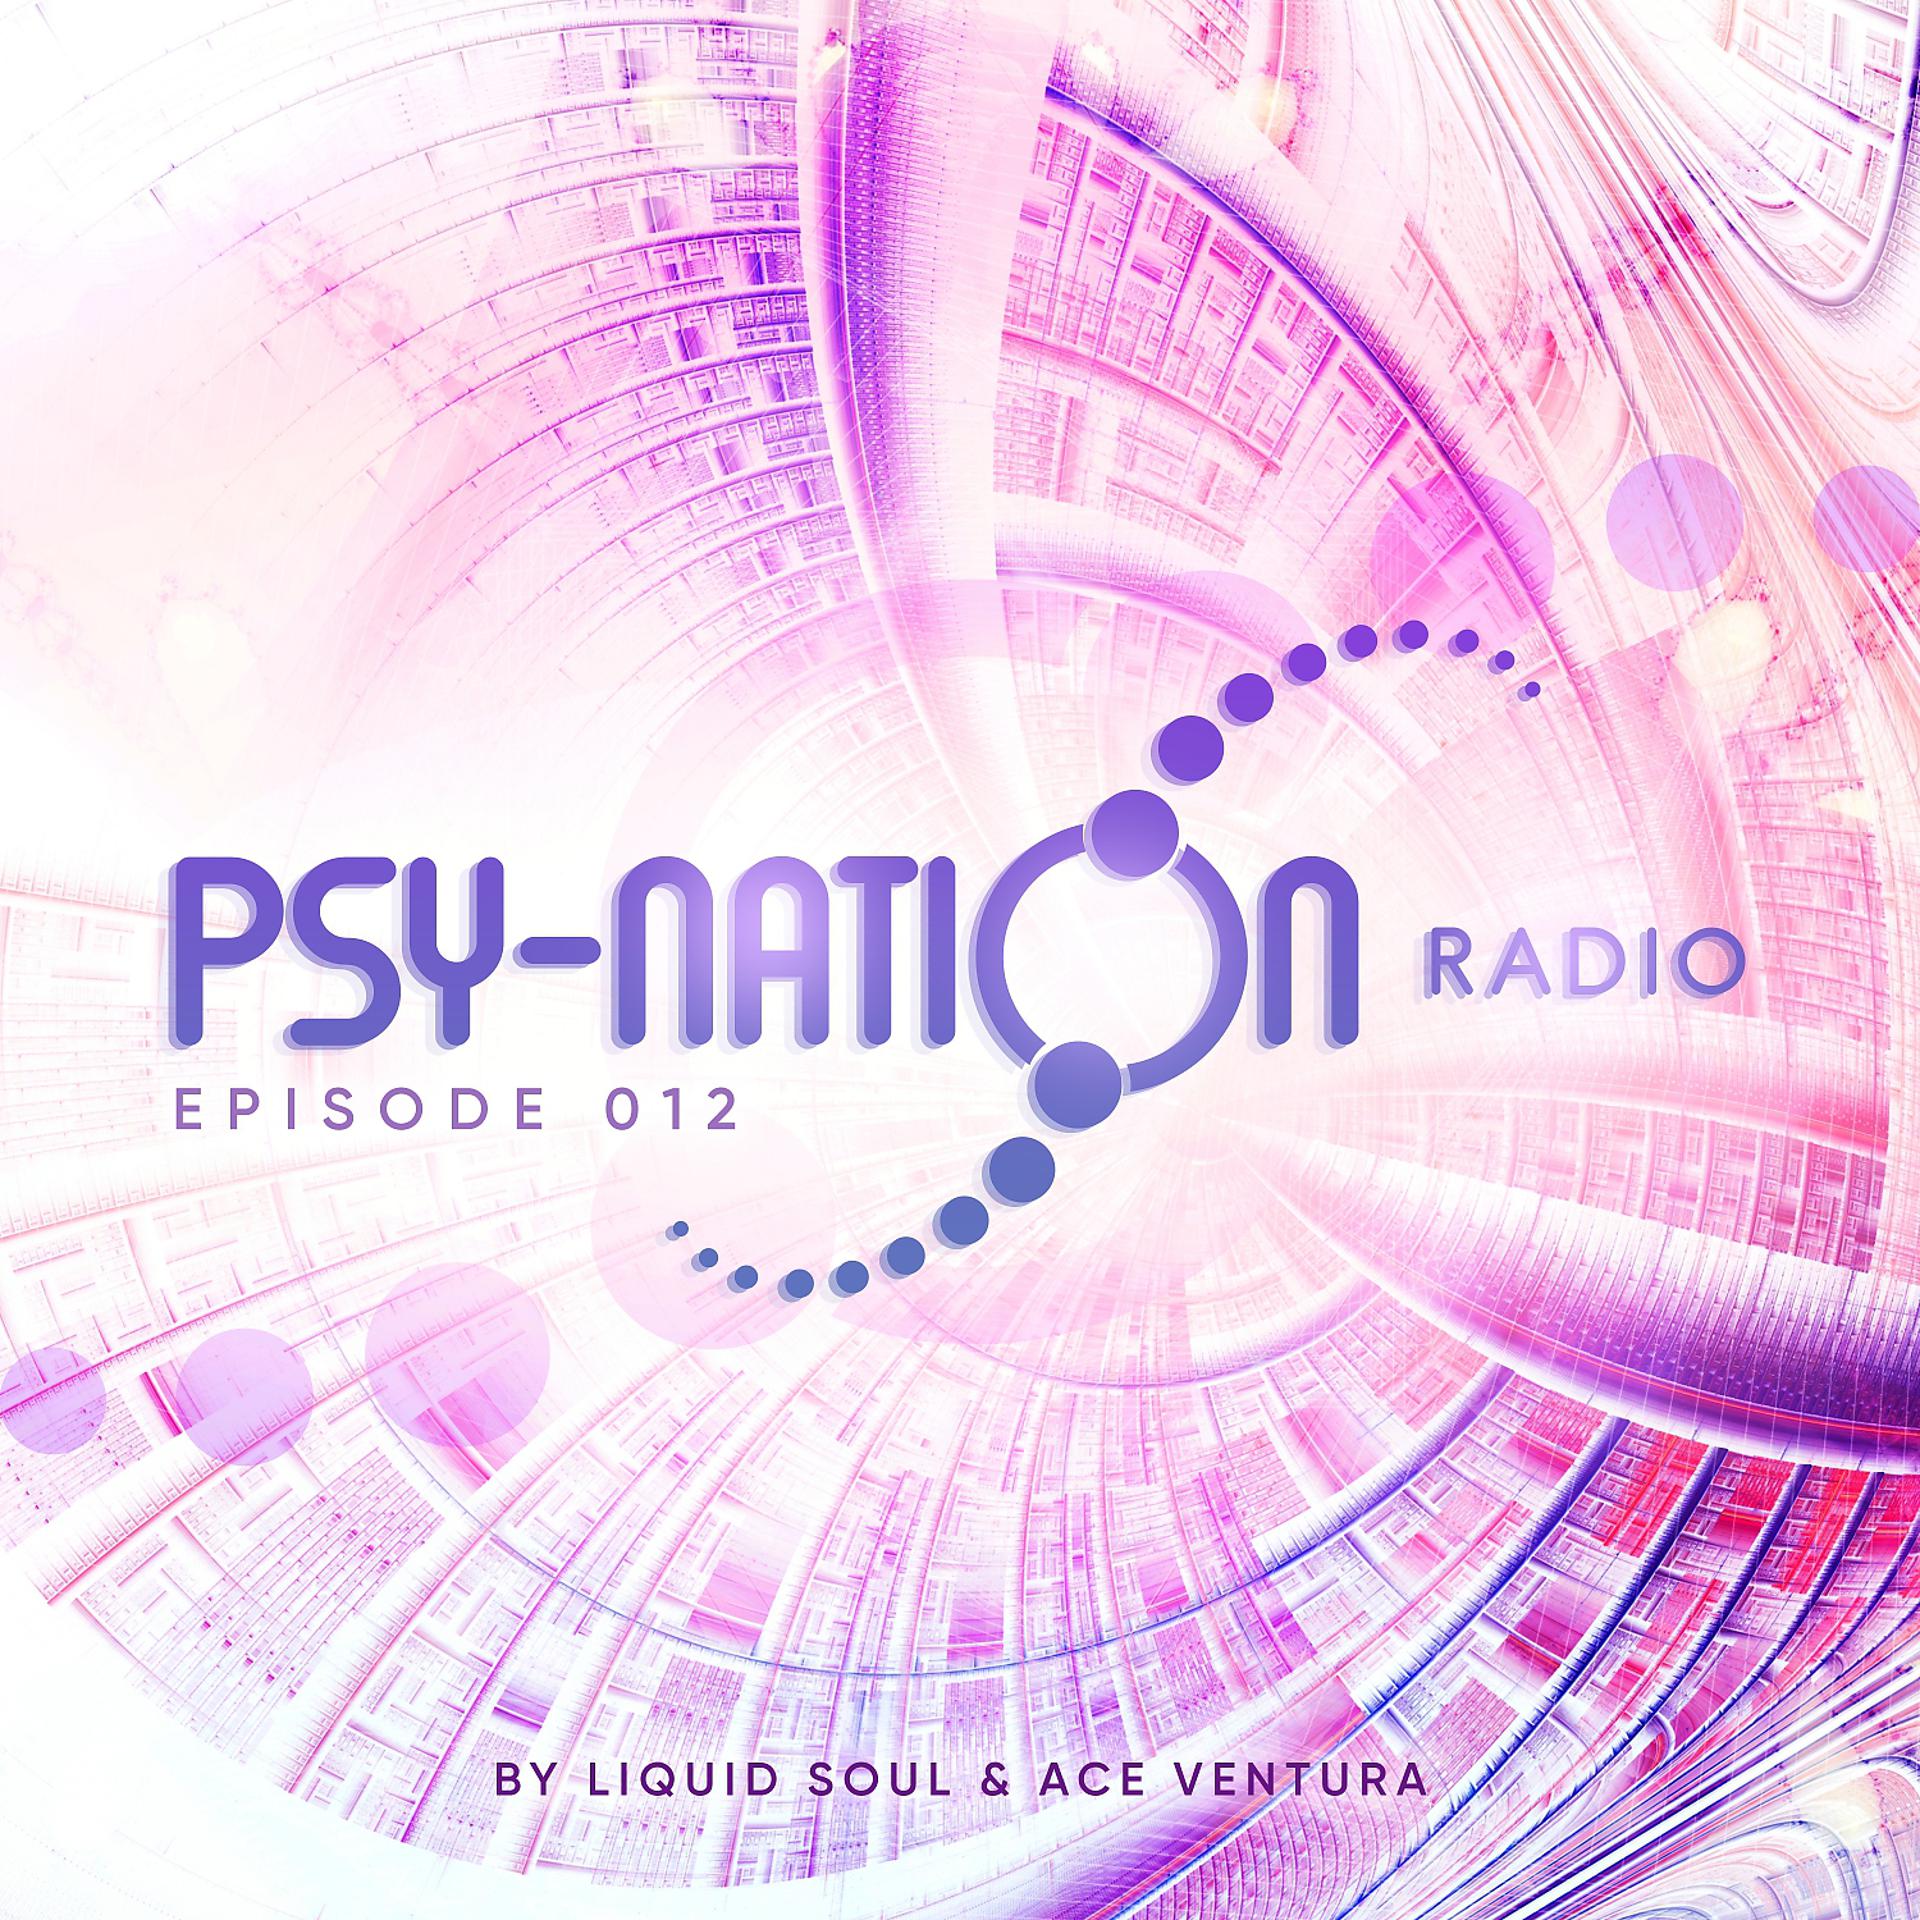 Постер альбома Psy-Nation Radio 012 - By Liquid Soul & Ace Ventura